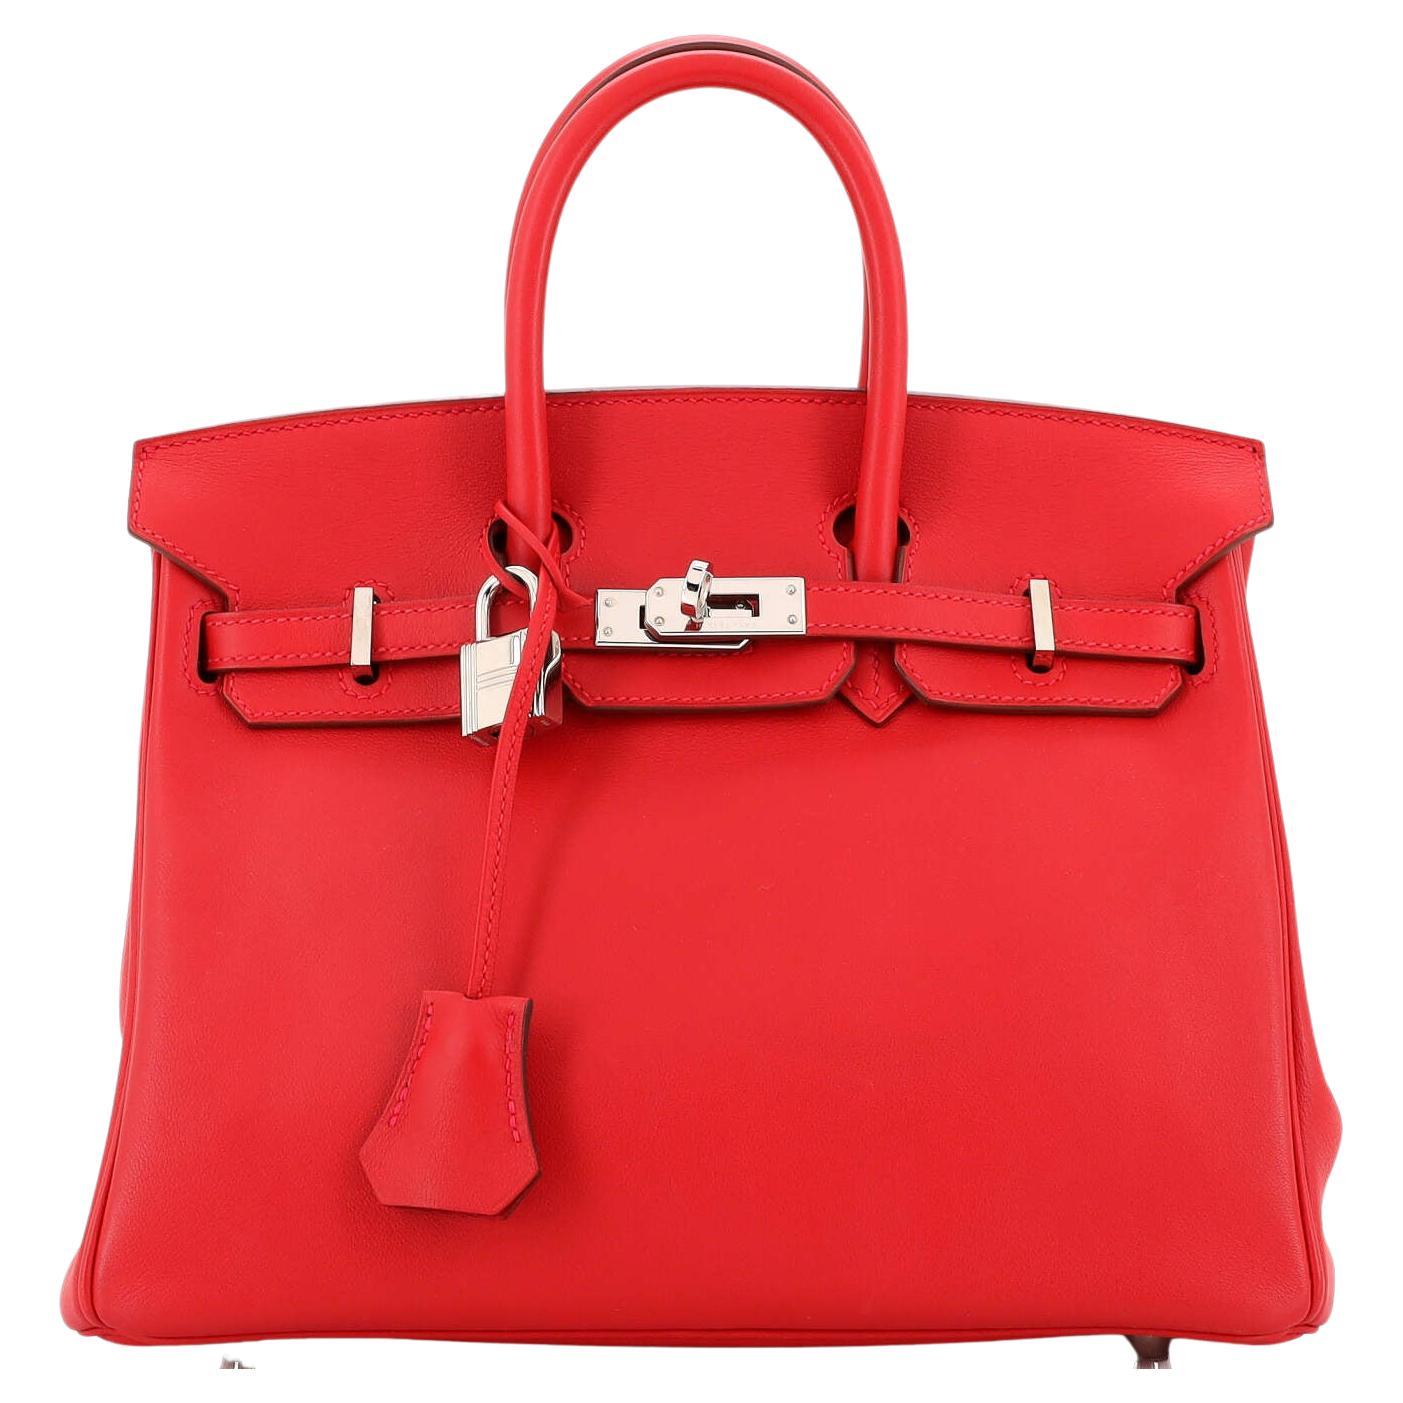 Hermes Birkin Handbag Rouge Casaque Swift with Palladium Hardware 25